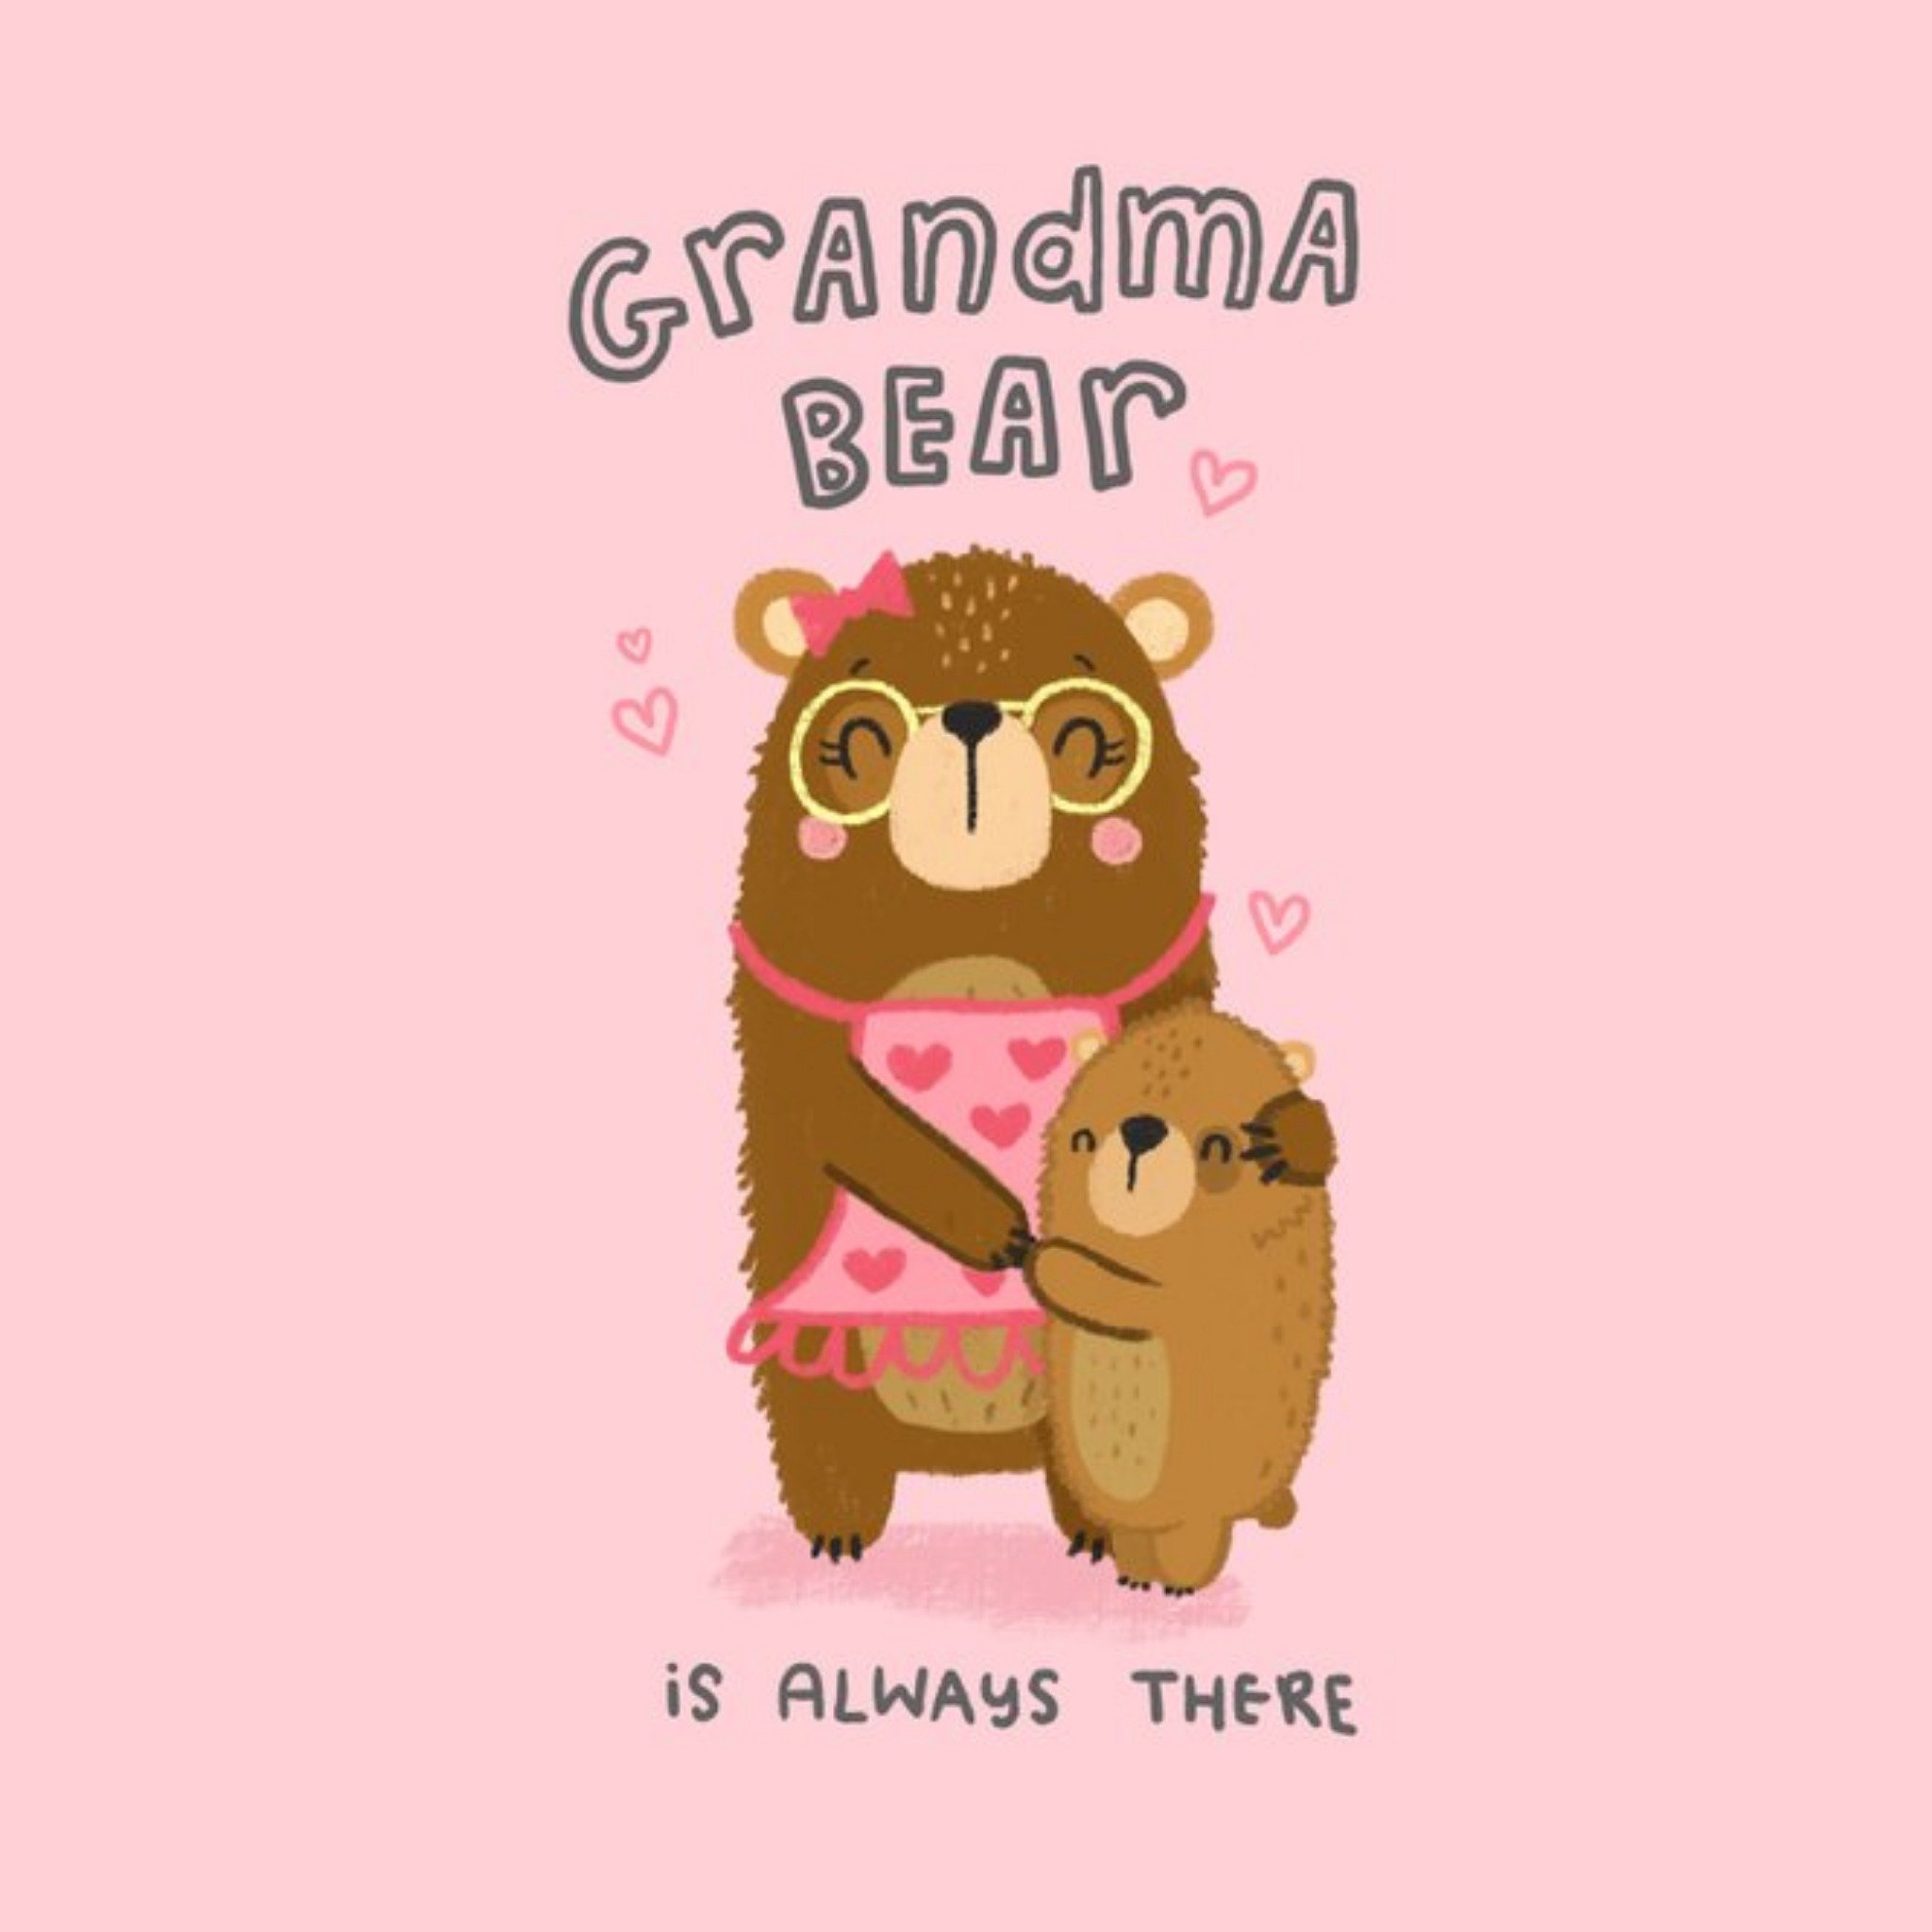 Love Hearts Blue Kiwi Illustration Cute Grandmother Bears Pink Birthday Card, Large